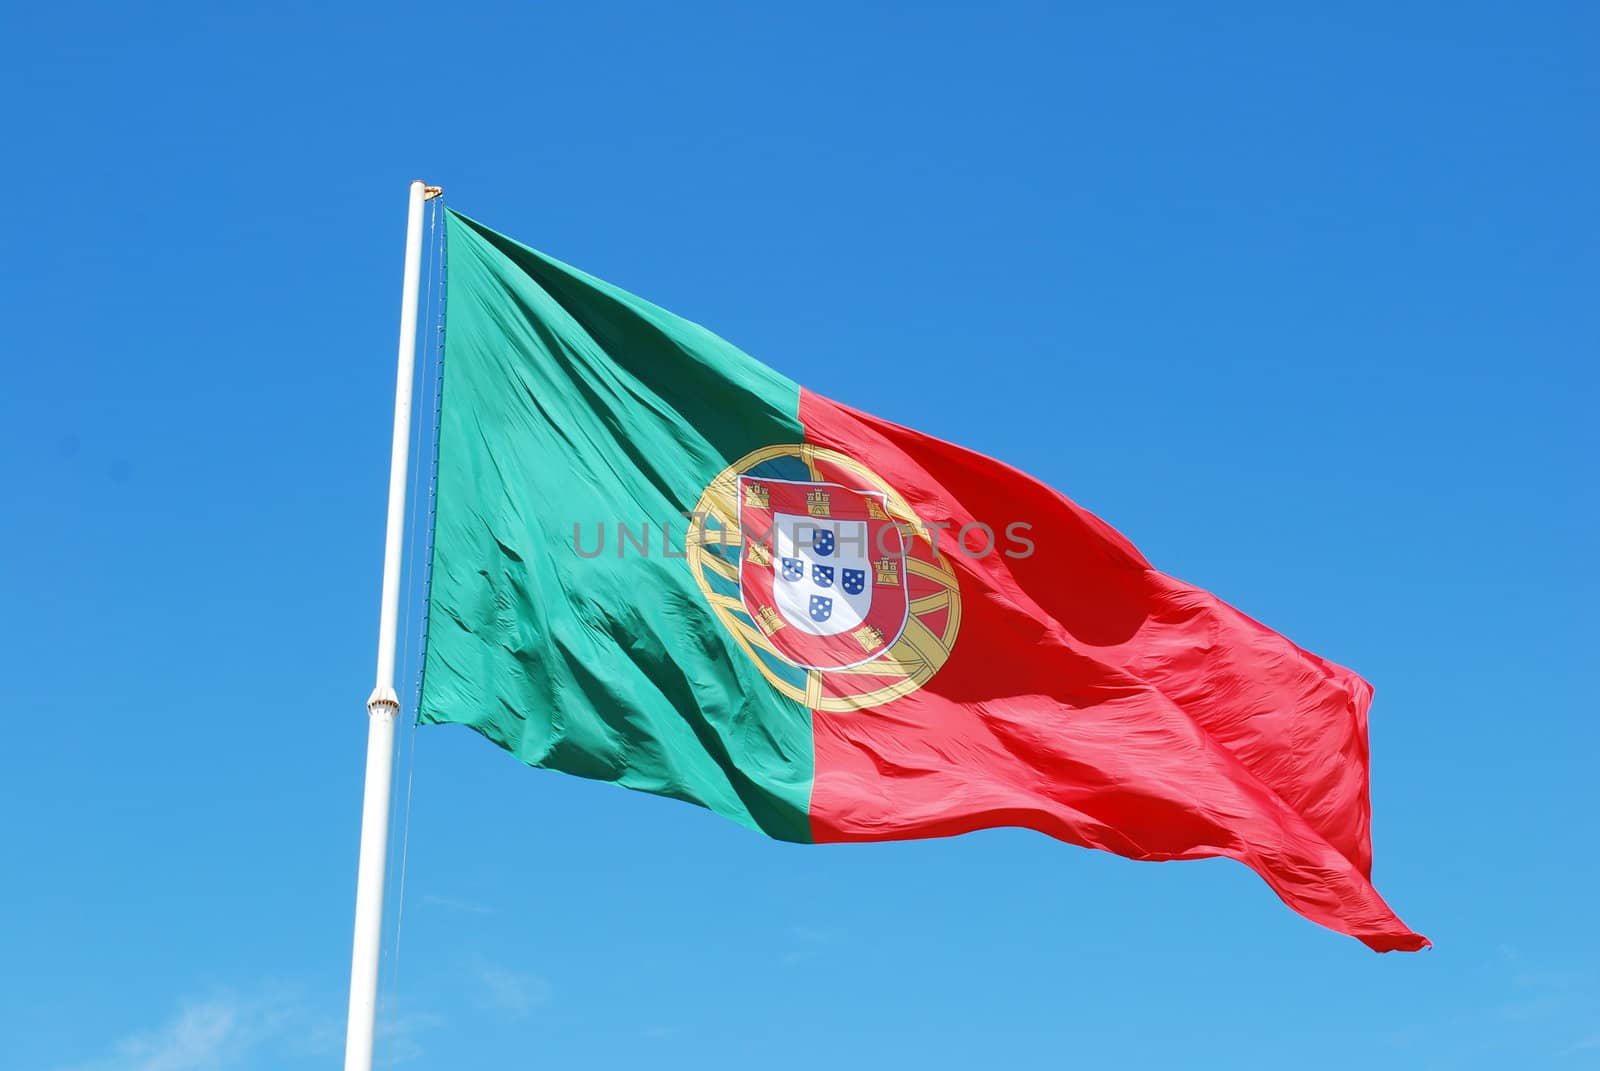 portuguese flag against blue sky background